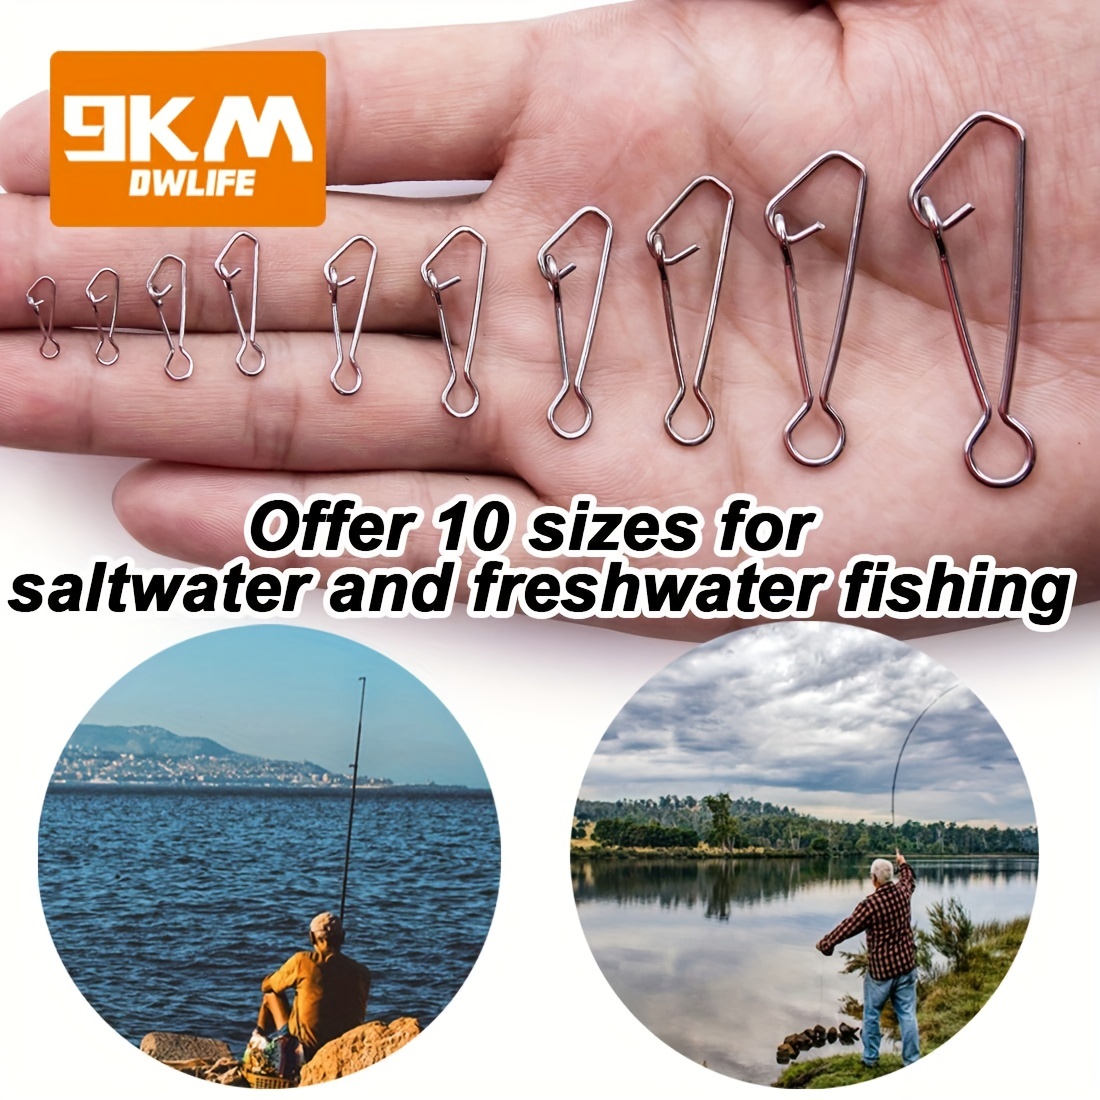 9km Fishing Snap Stainless Steel Saltwater Fishing Hook Lure